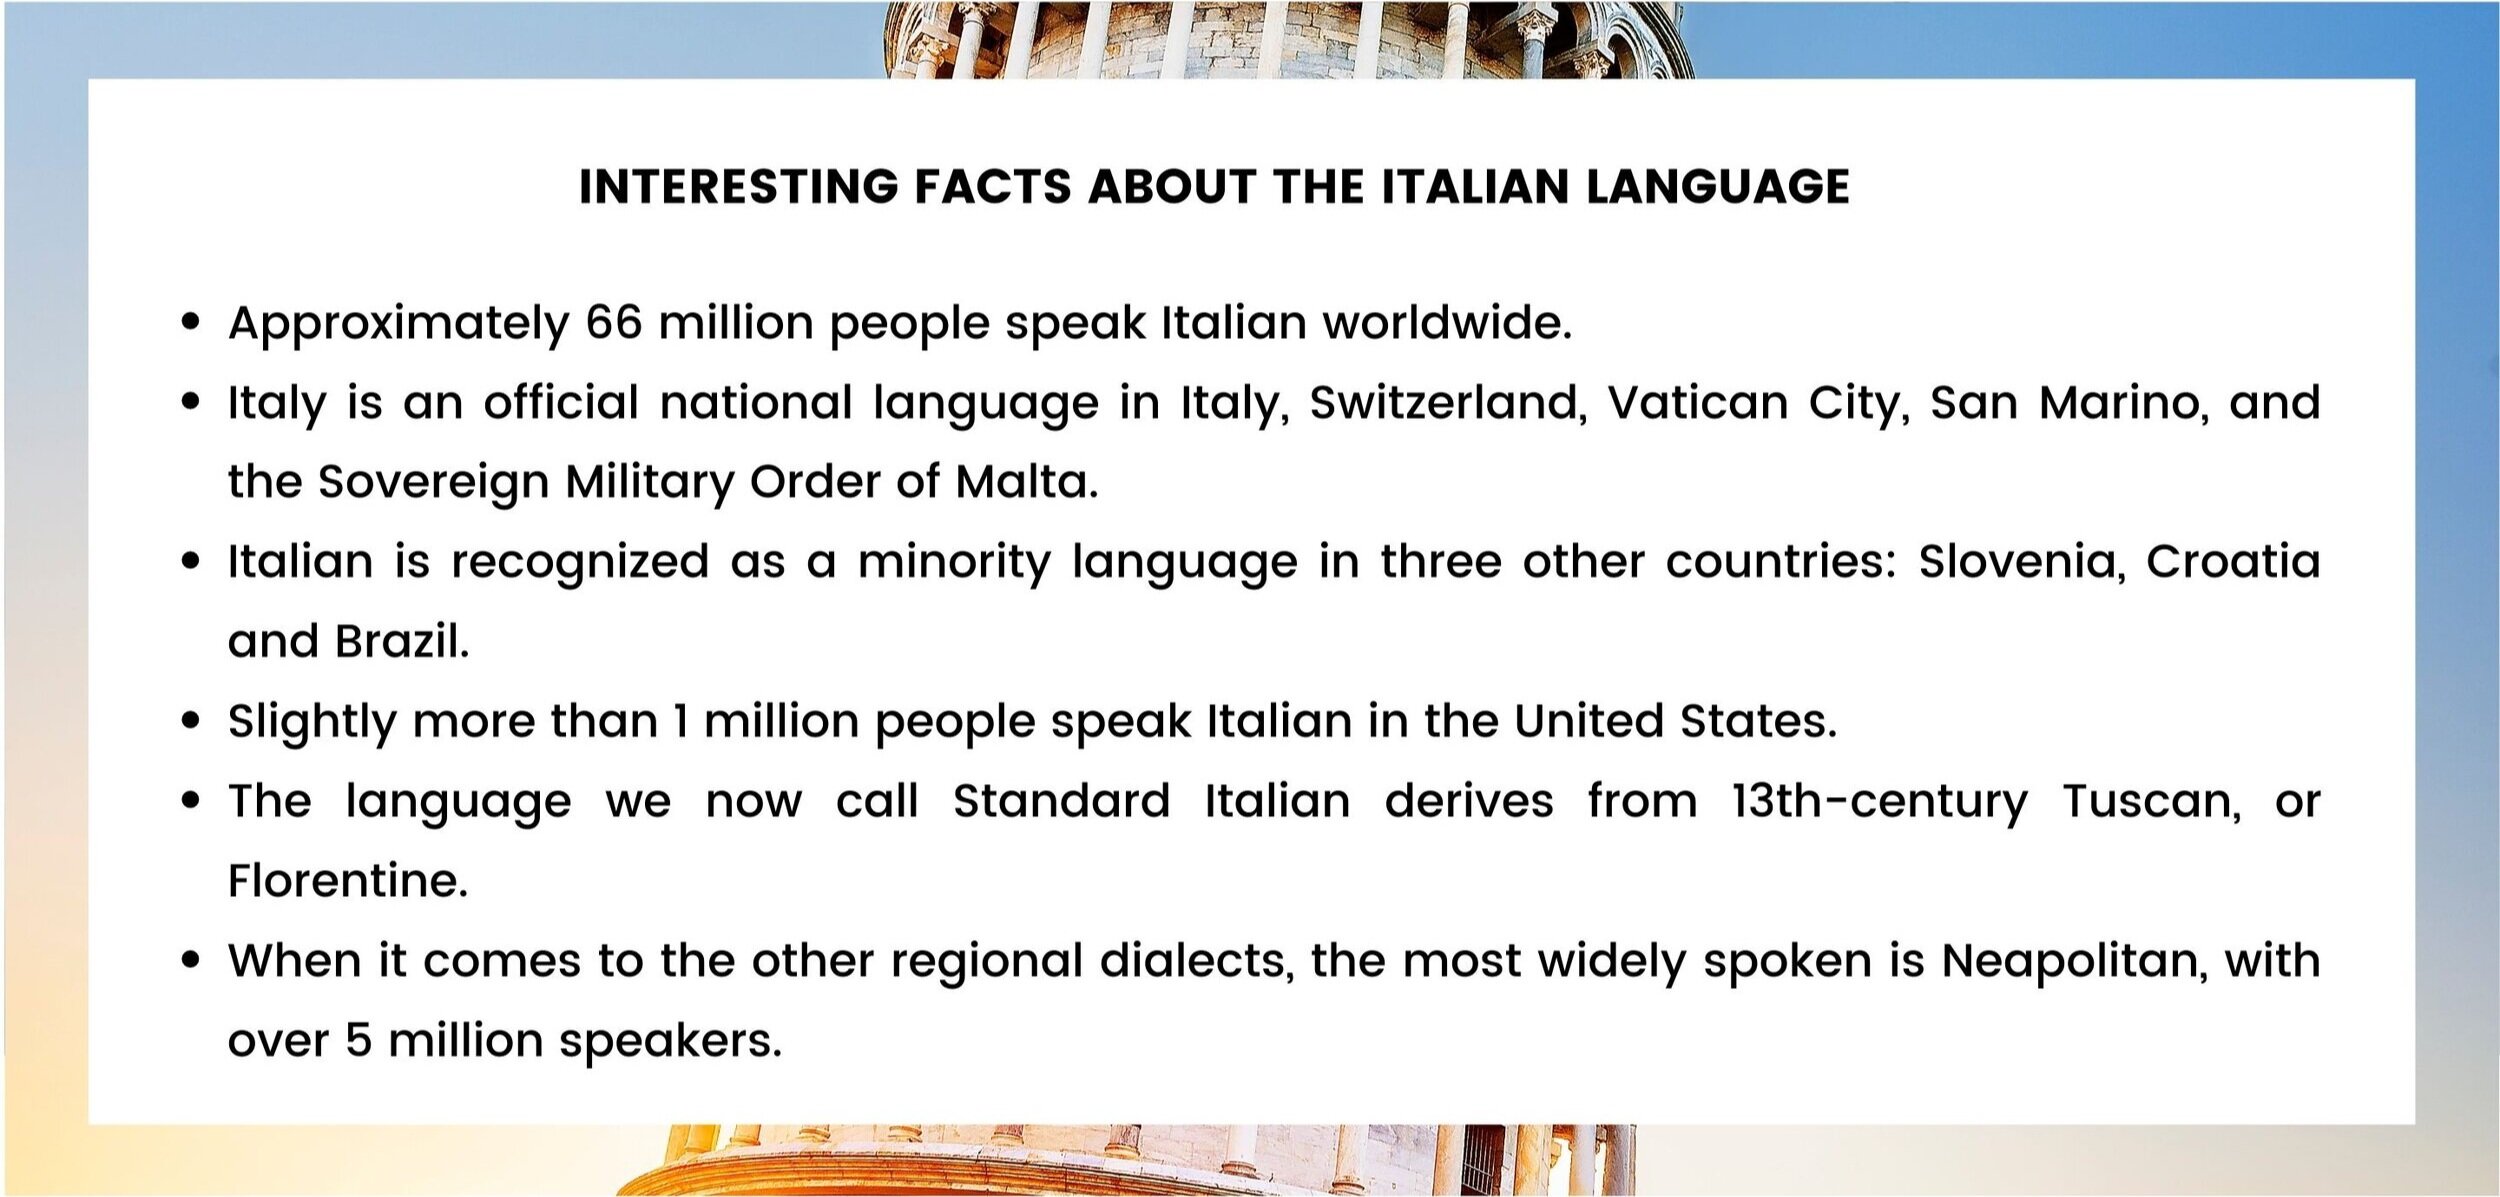 Italian language facts.jpg